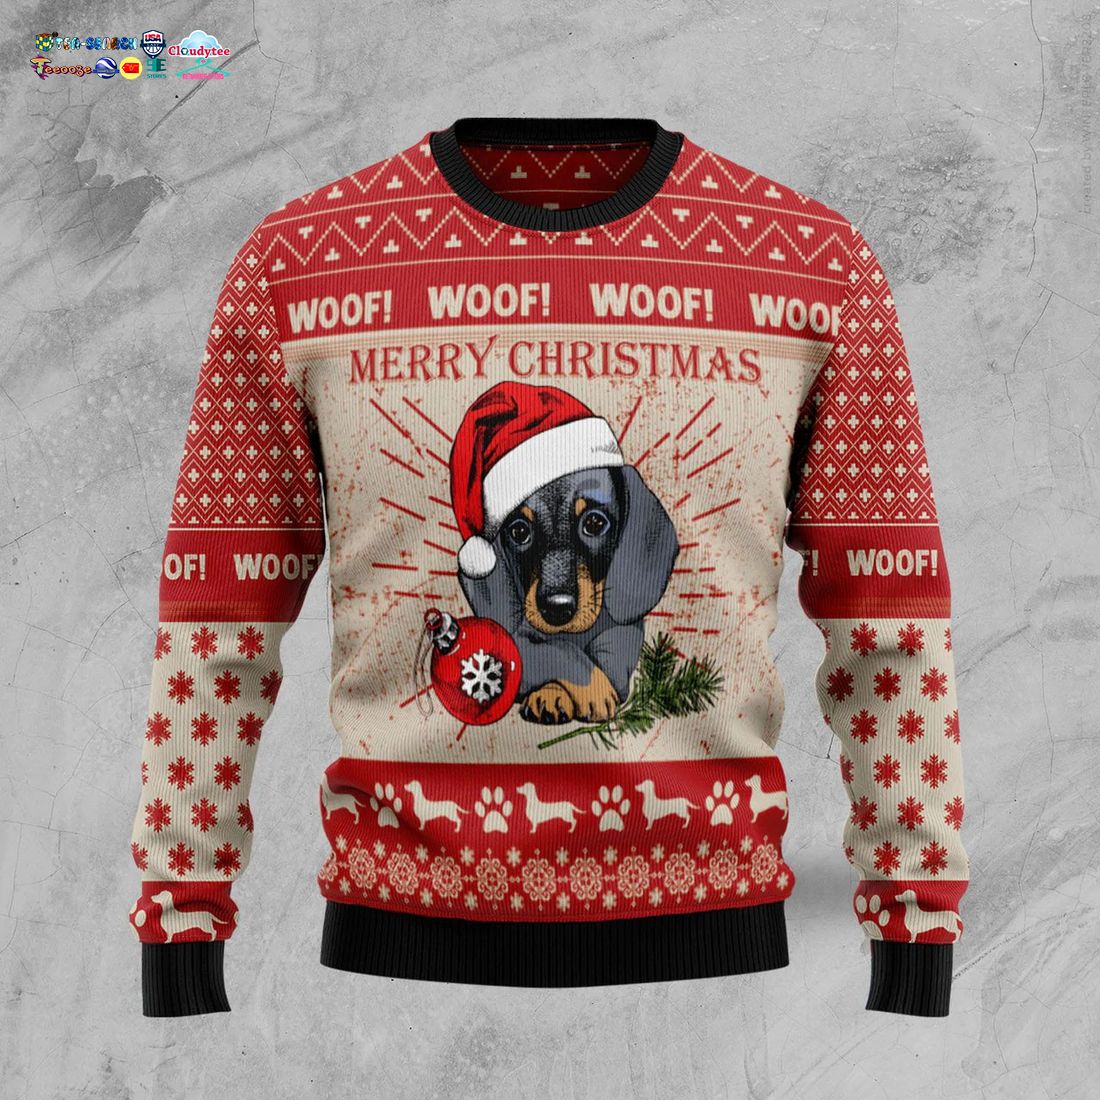 Merry Christmas Dachshund Ugly Christmas Sweater - Nice elegant click